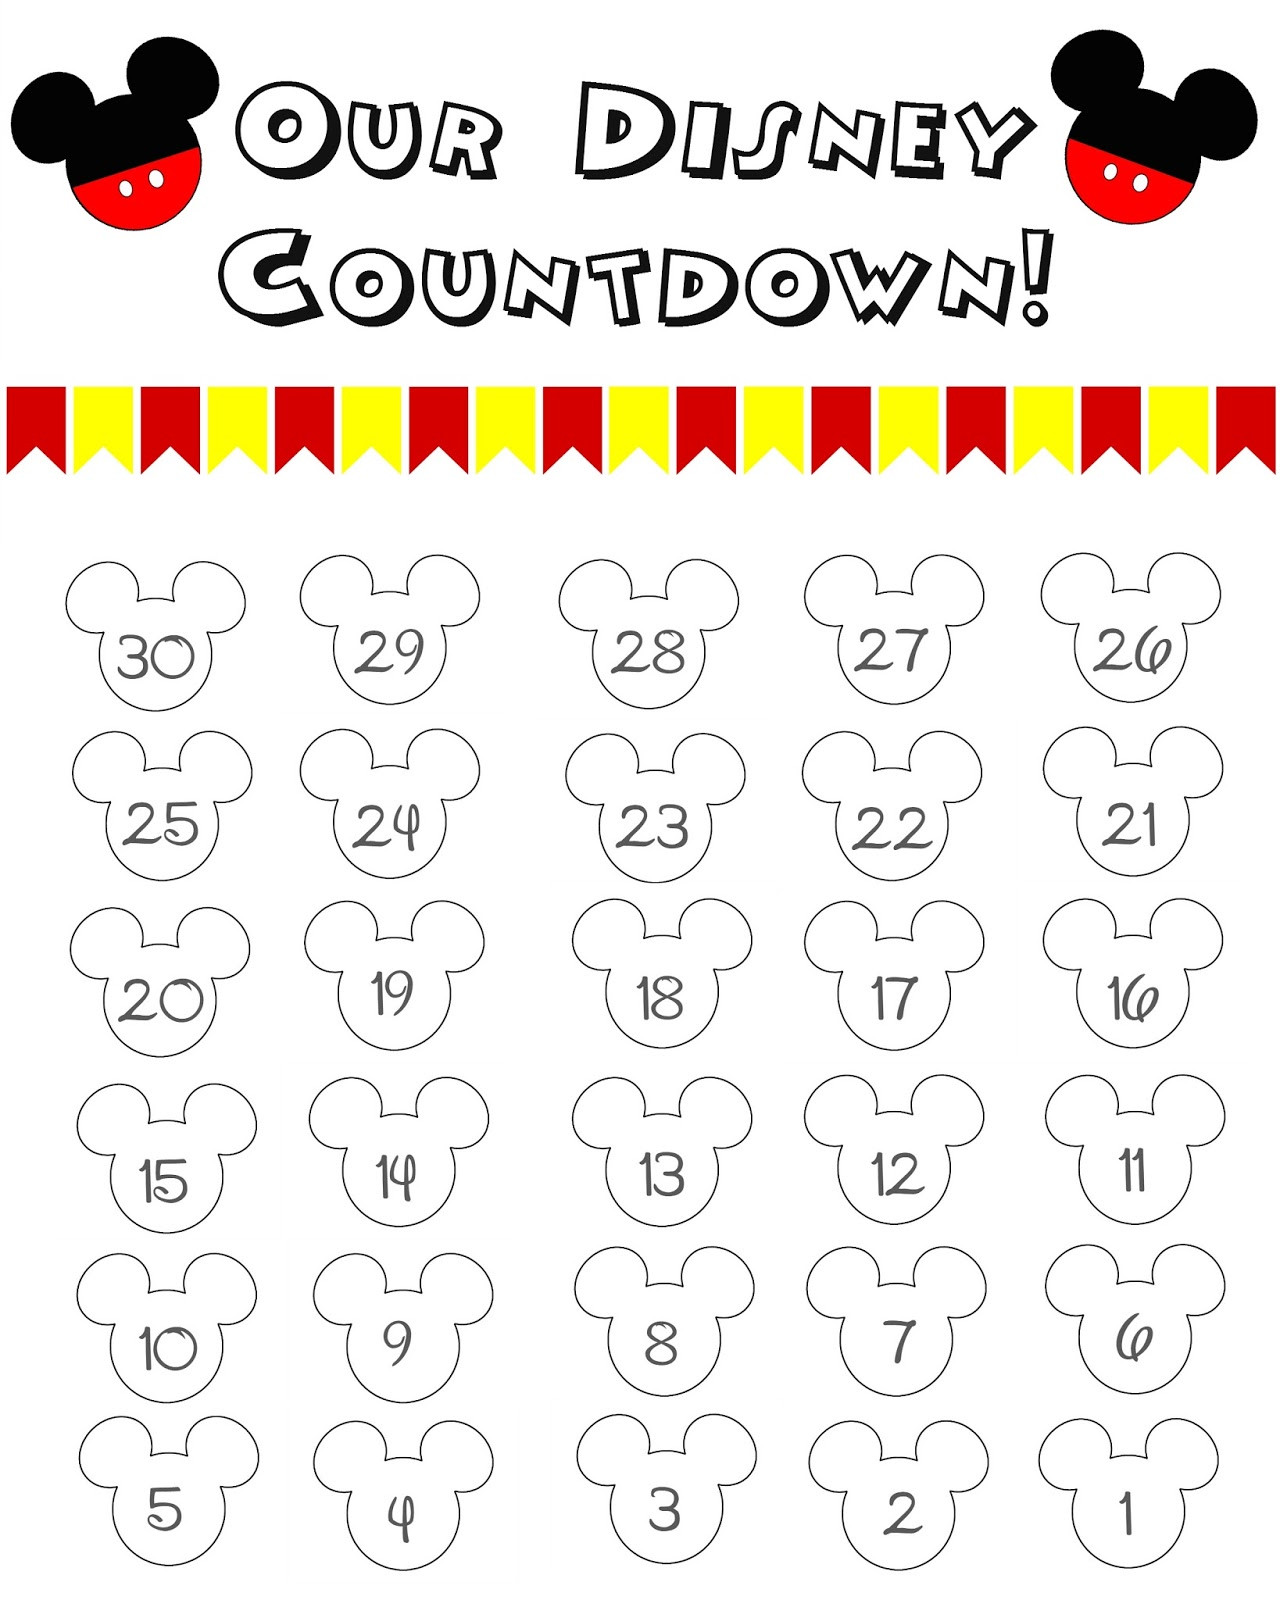 Printable Countdown Calendar Template 10 Fun Printable Disney Countdown Calendars